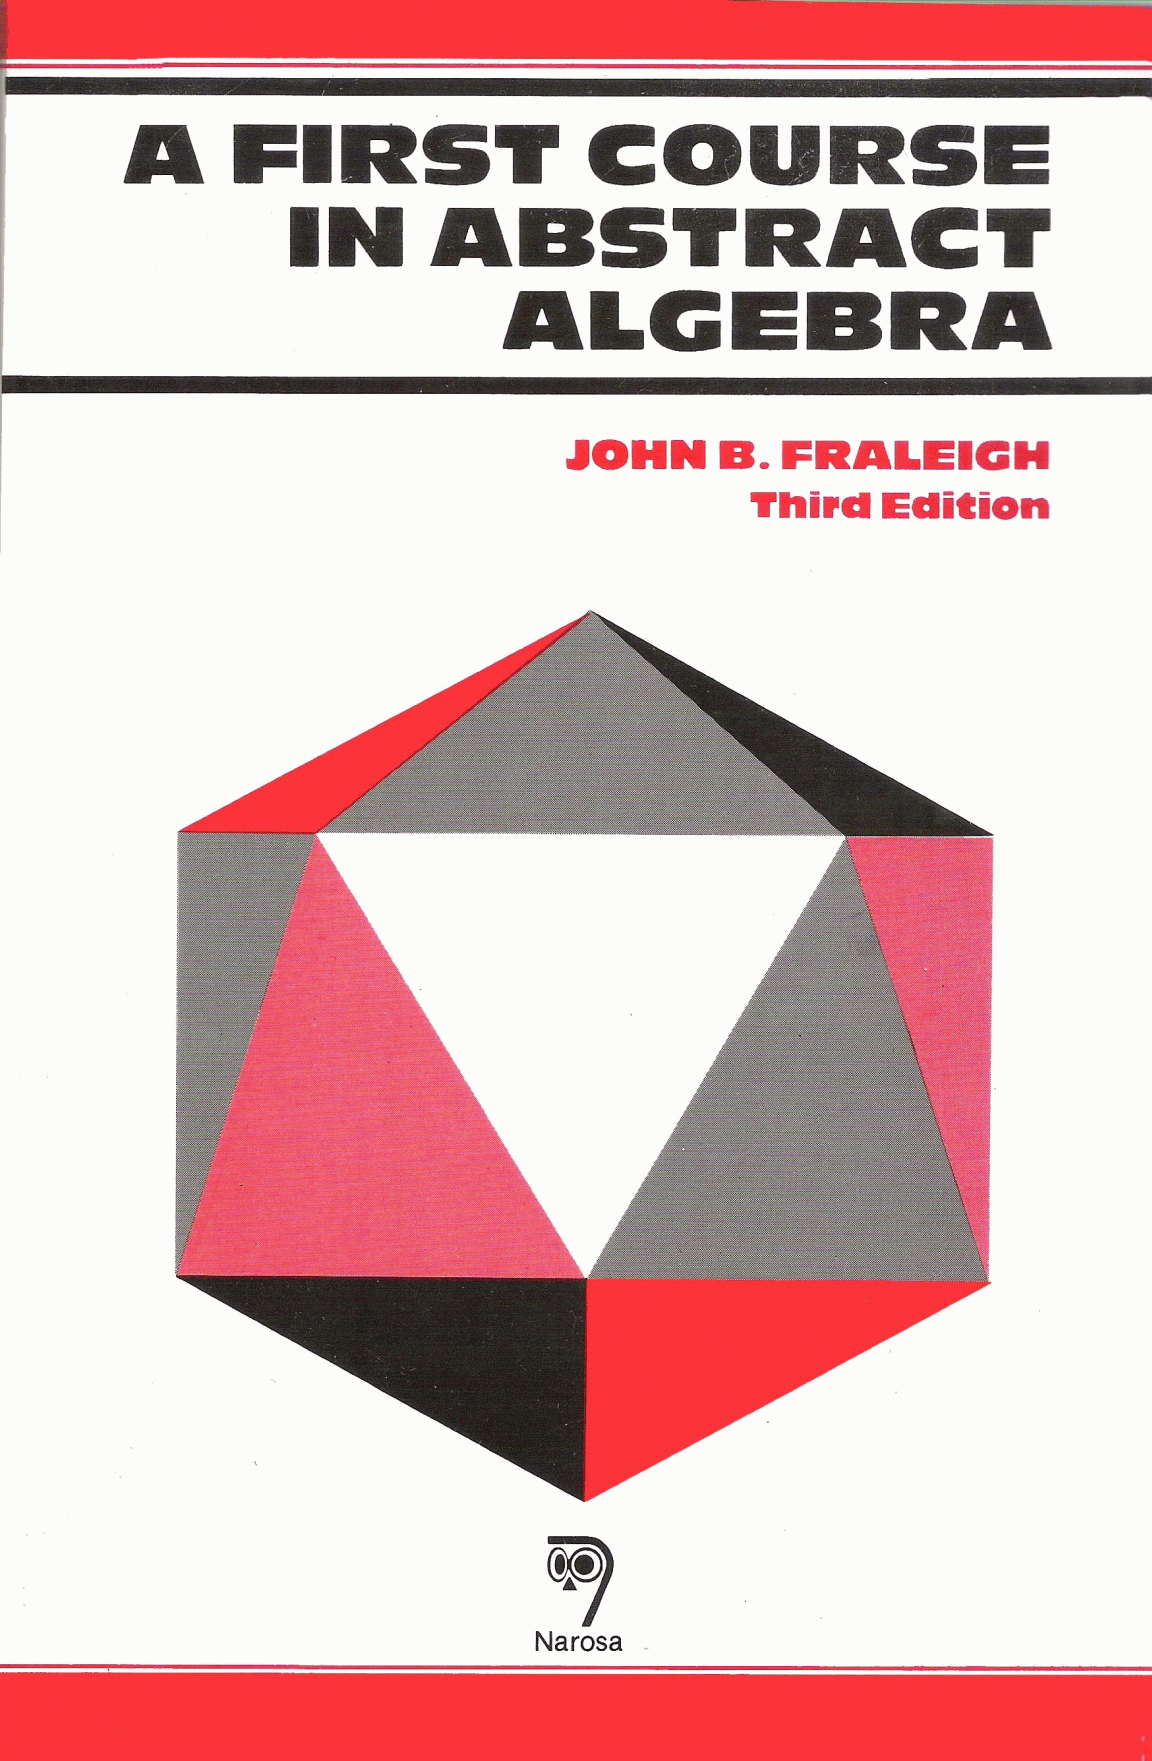 Abstract Algebra Group 117